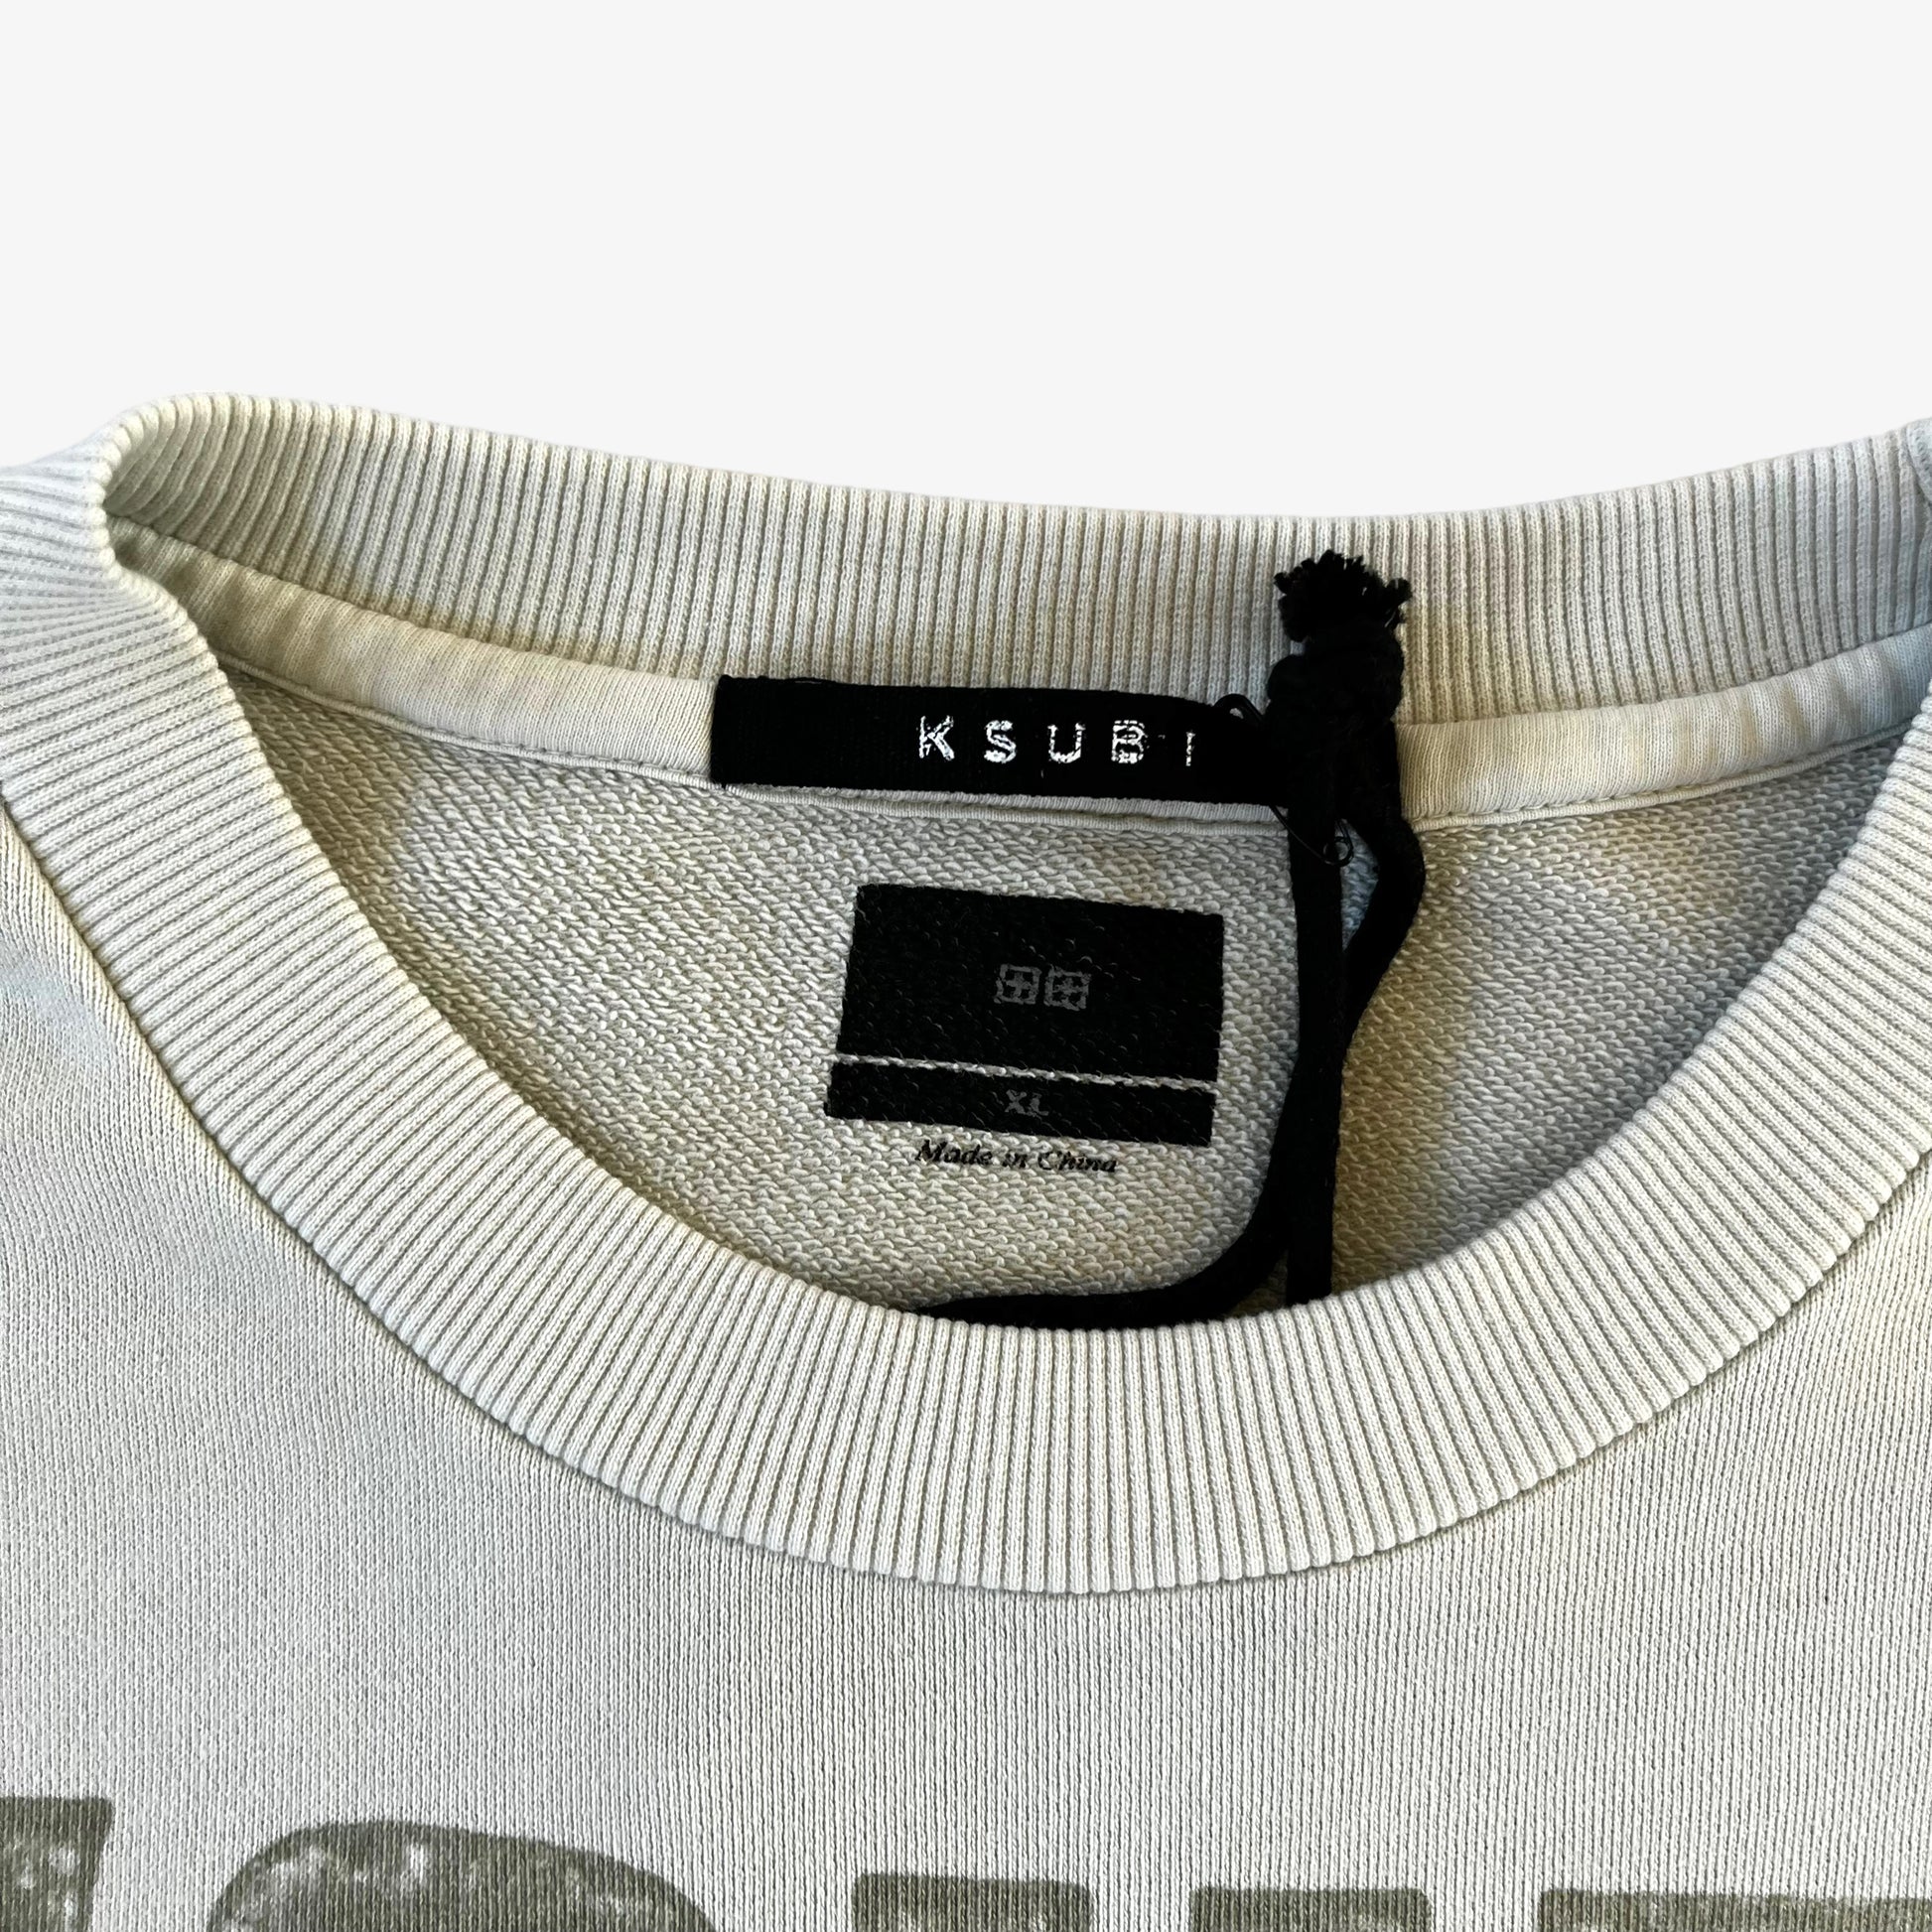 Ksubi High Lovers Crew Antike Sweatshirt Brand New With Tags Label - Casspios Dream